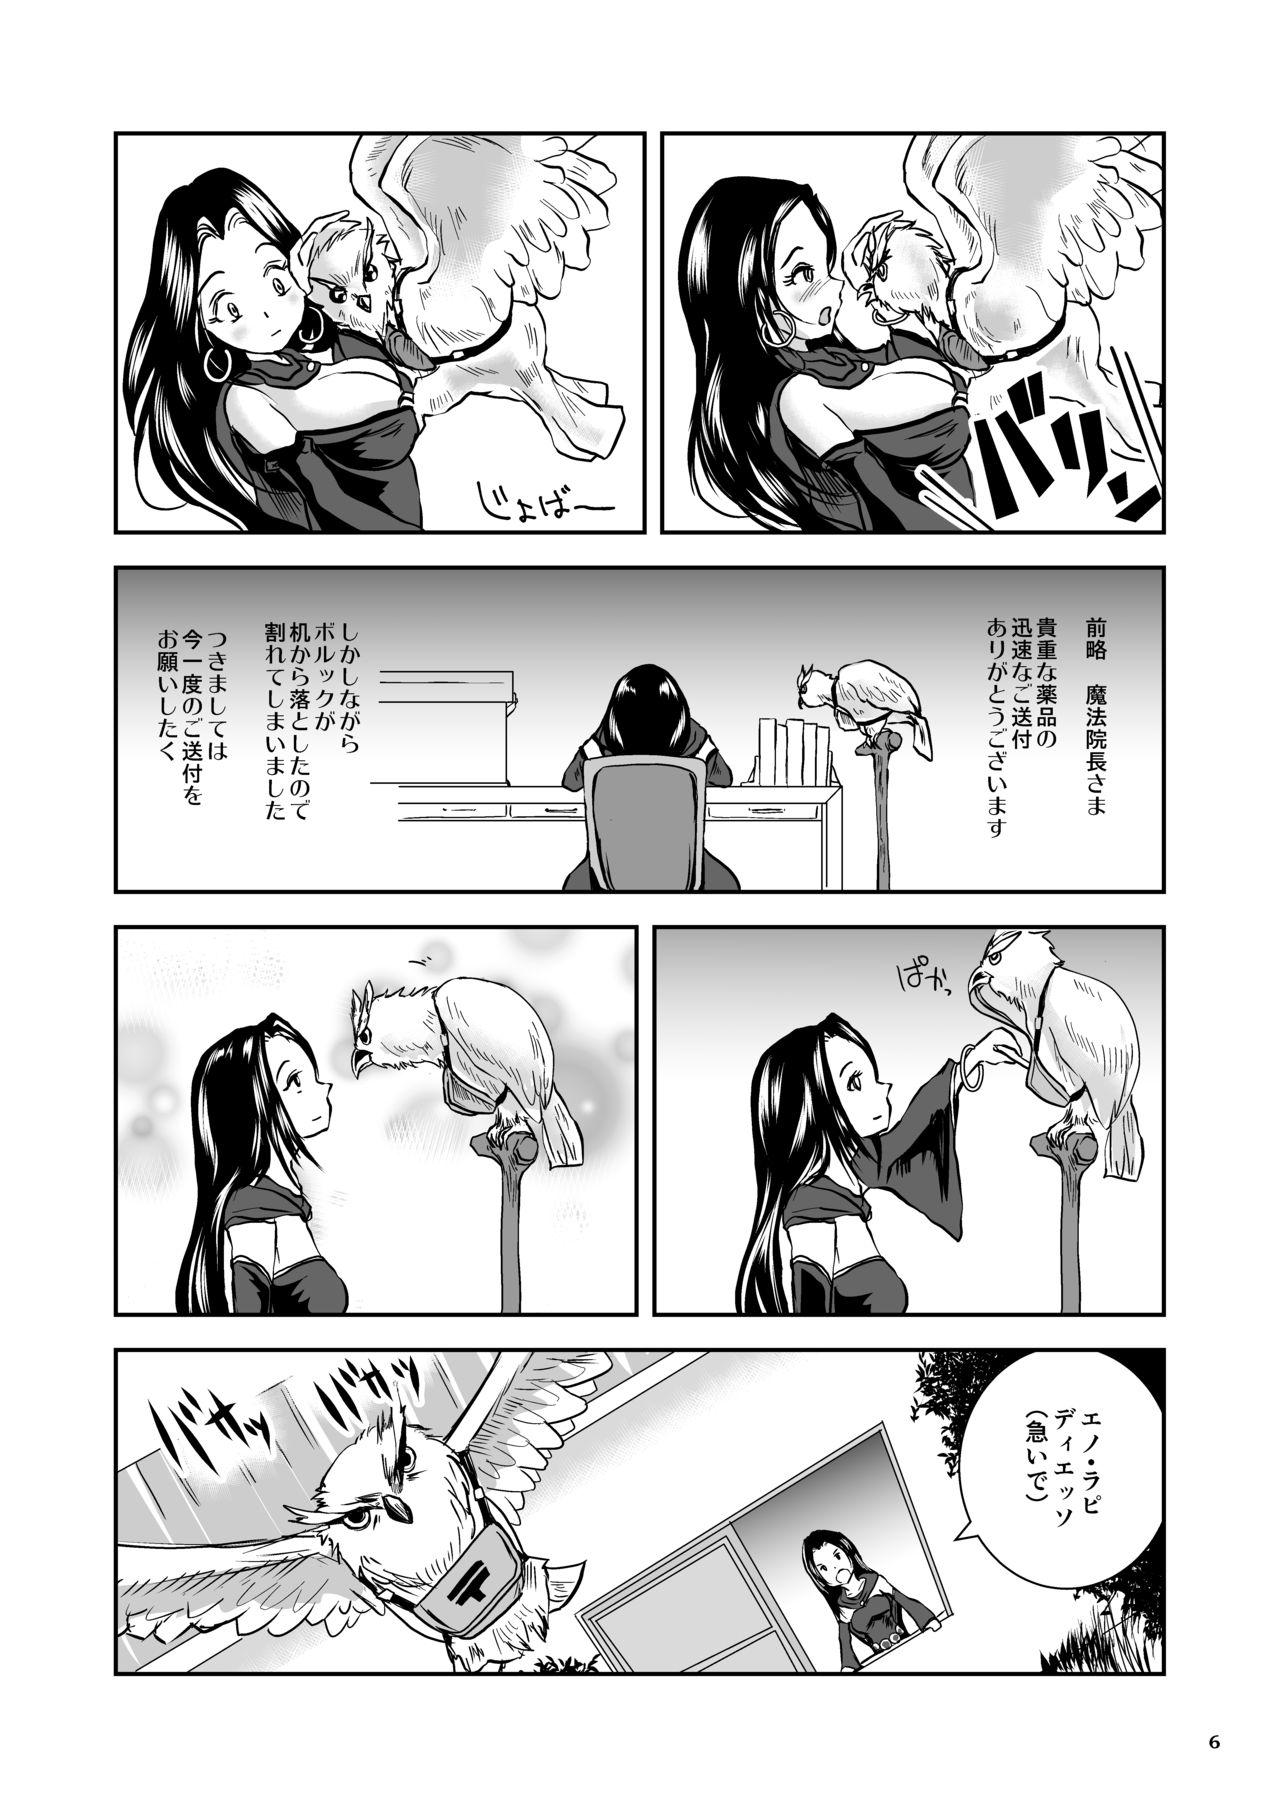 Vip Oonamekuji to Kurokami no Mahoutsukai - Parasitized Giant Slugs V.S. Sorceress of the Black Hair as Aura Fresh - Page 6